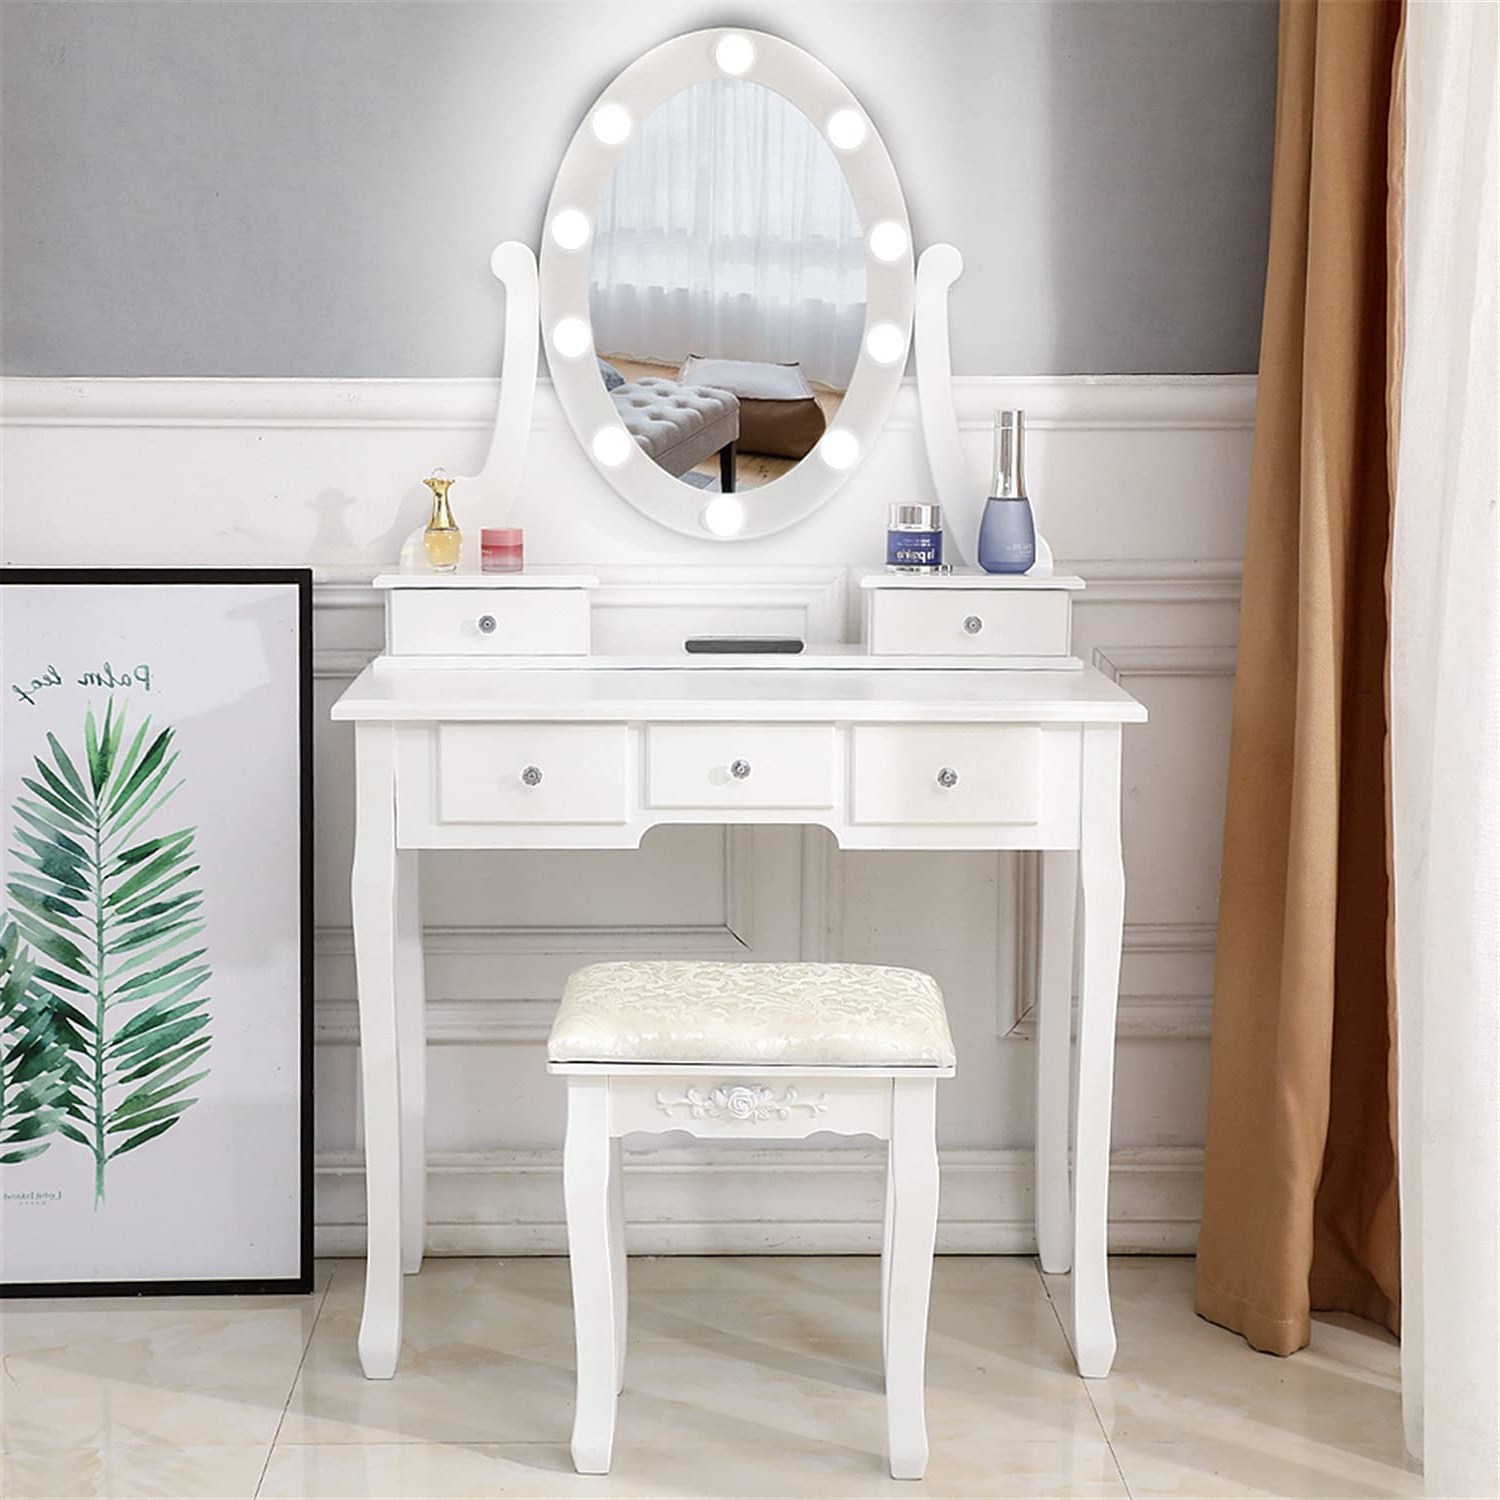 Ktaxon Vanity Table 10 LED Lights, 5 Drawers Makeup Dressing Desk with Cushioned Stool Set,Bedroom Vanities Set White - image 1 of 13